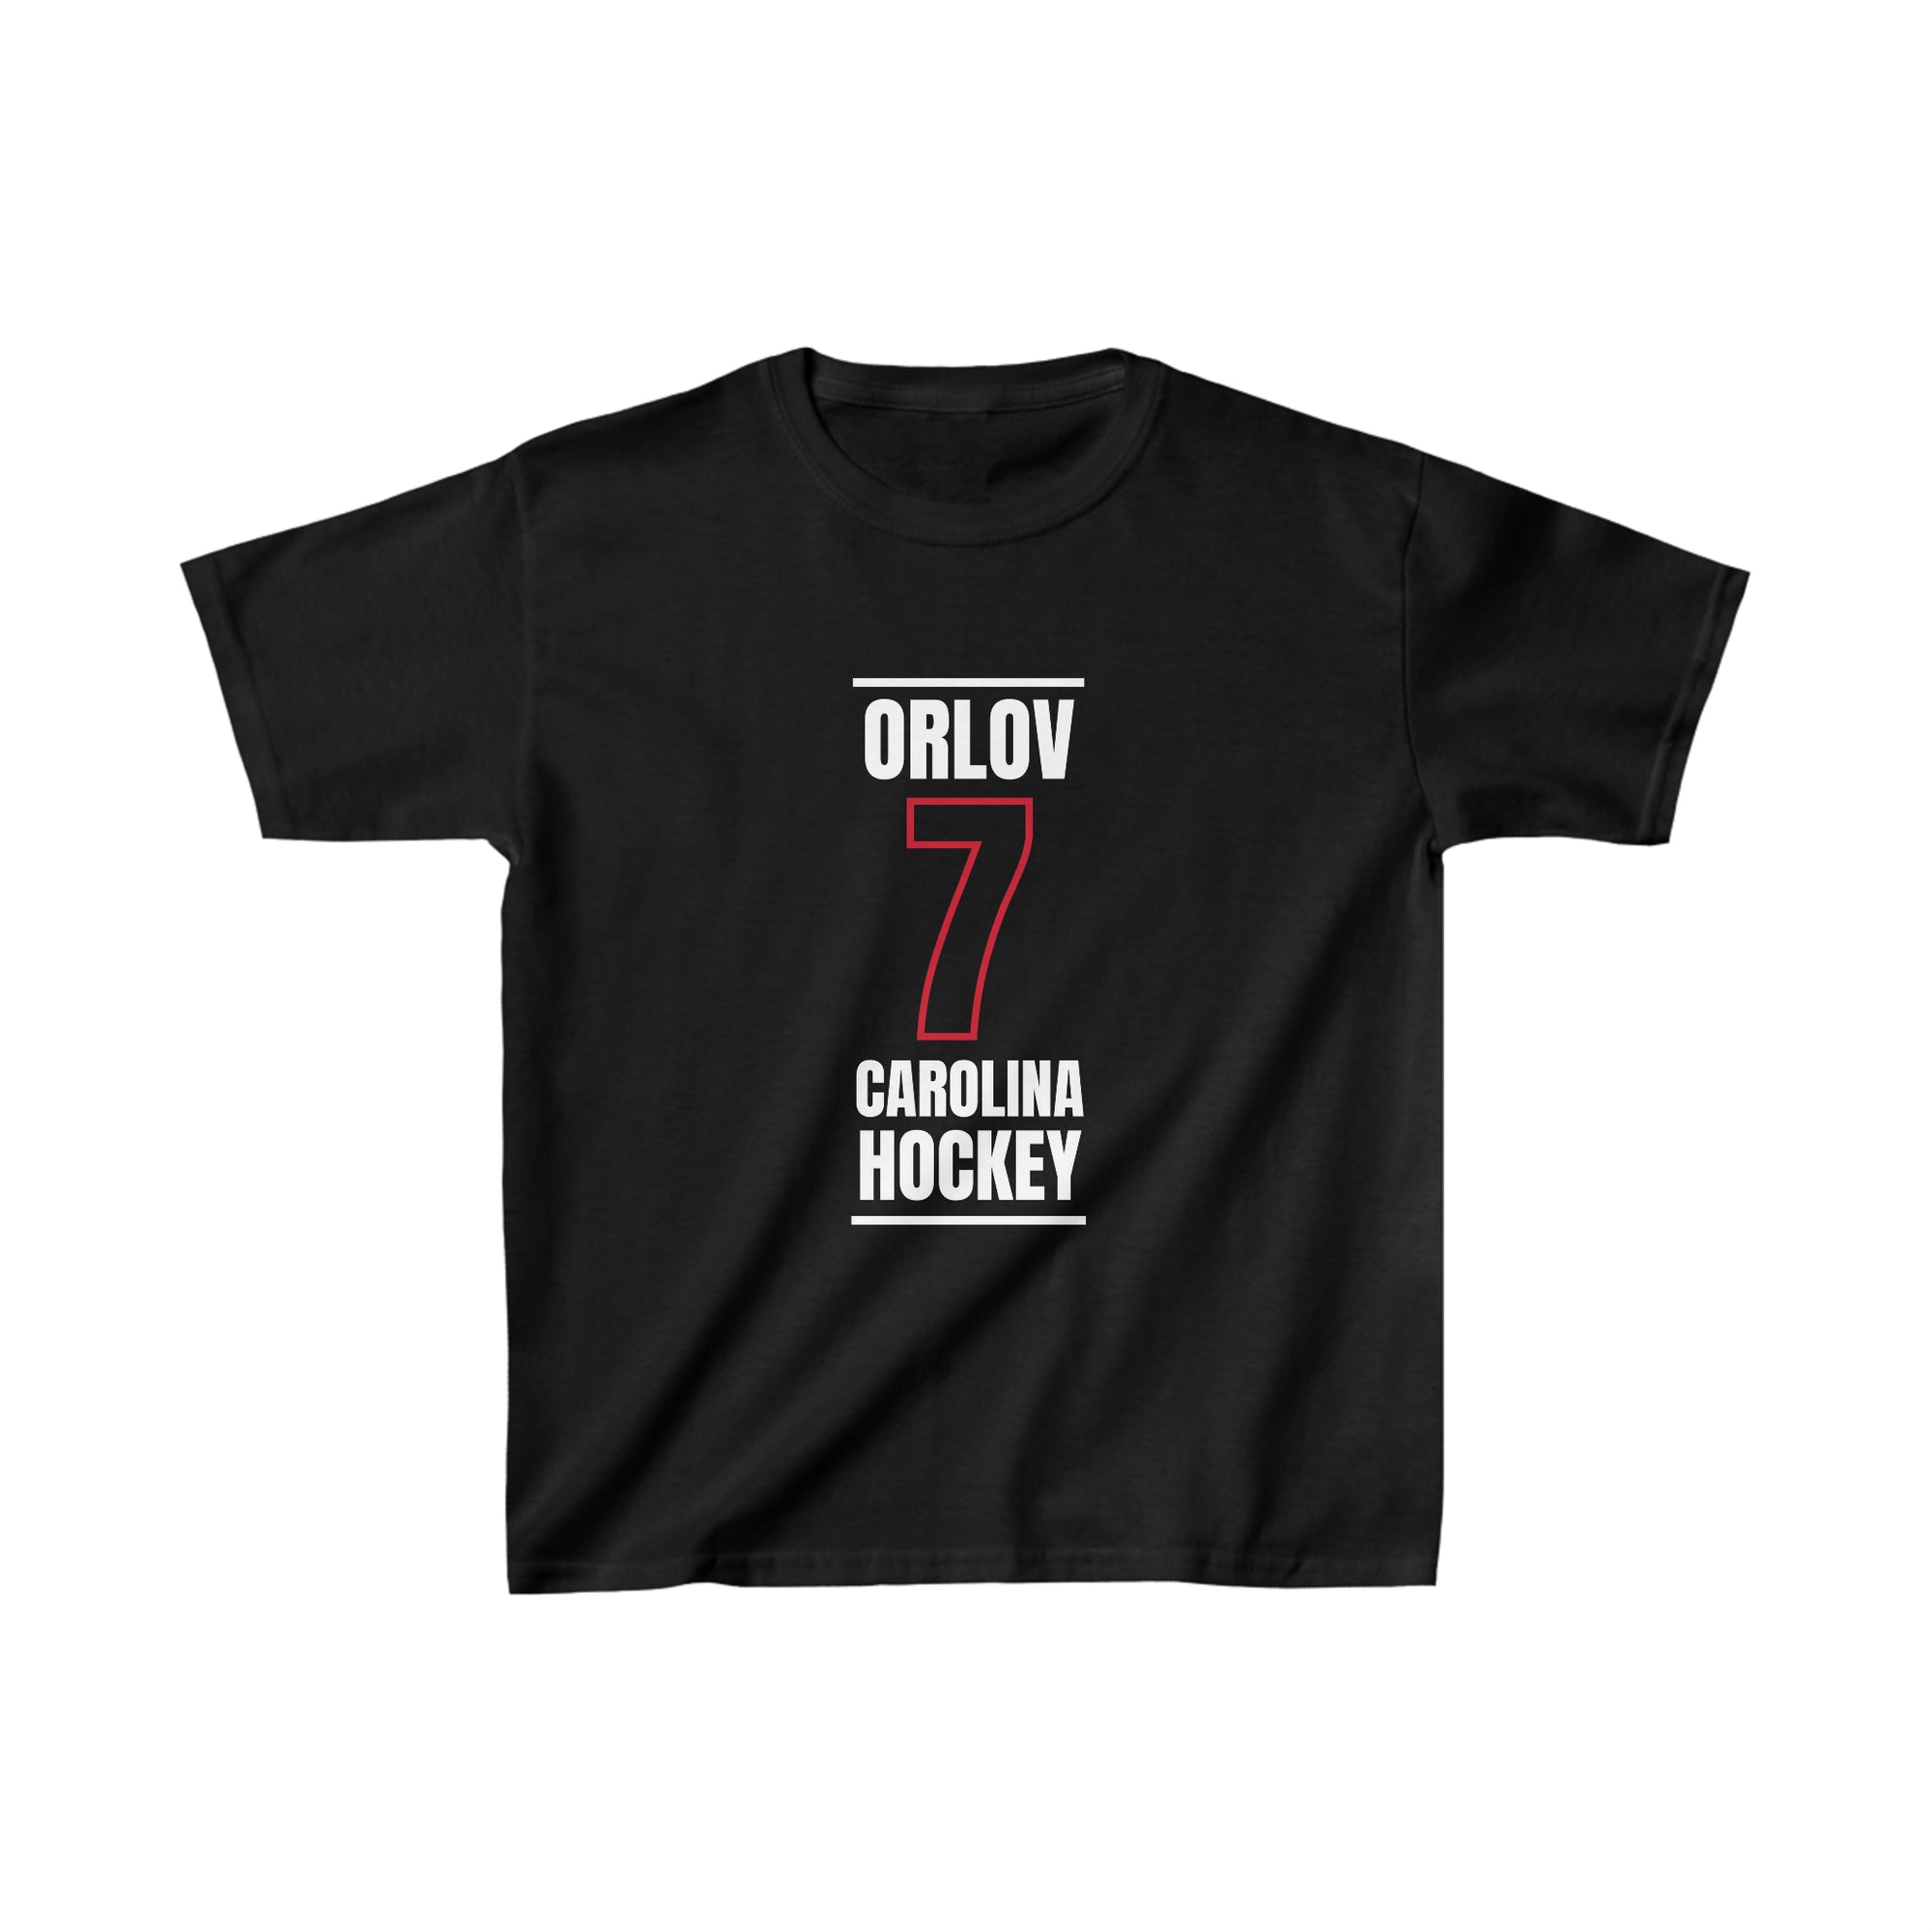 Orlov 7 Carolina Hockey Black Vertical Design Kids Tee